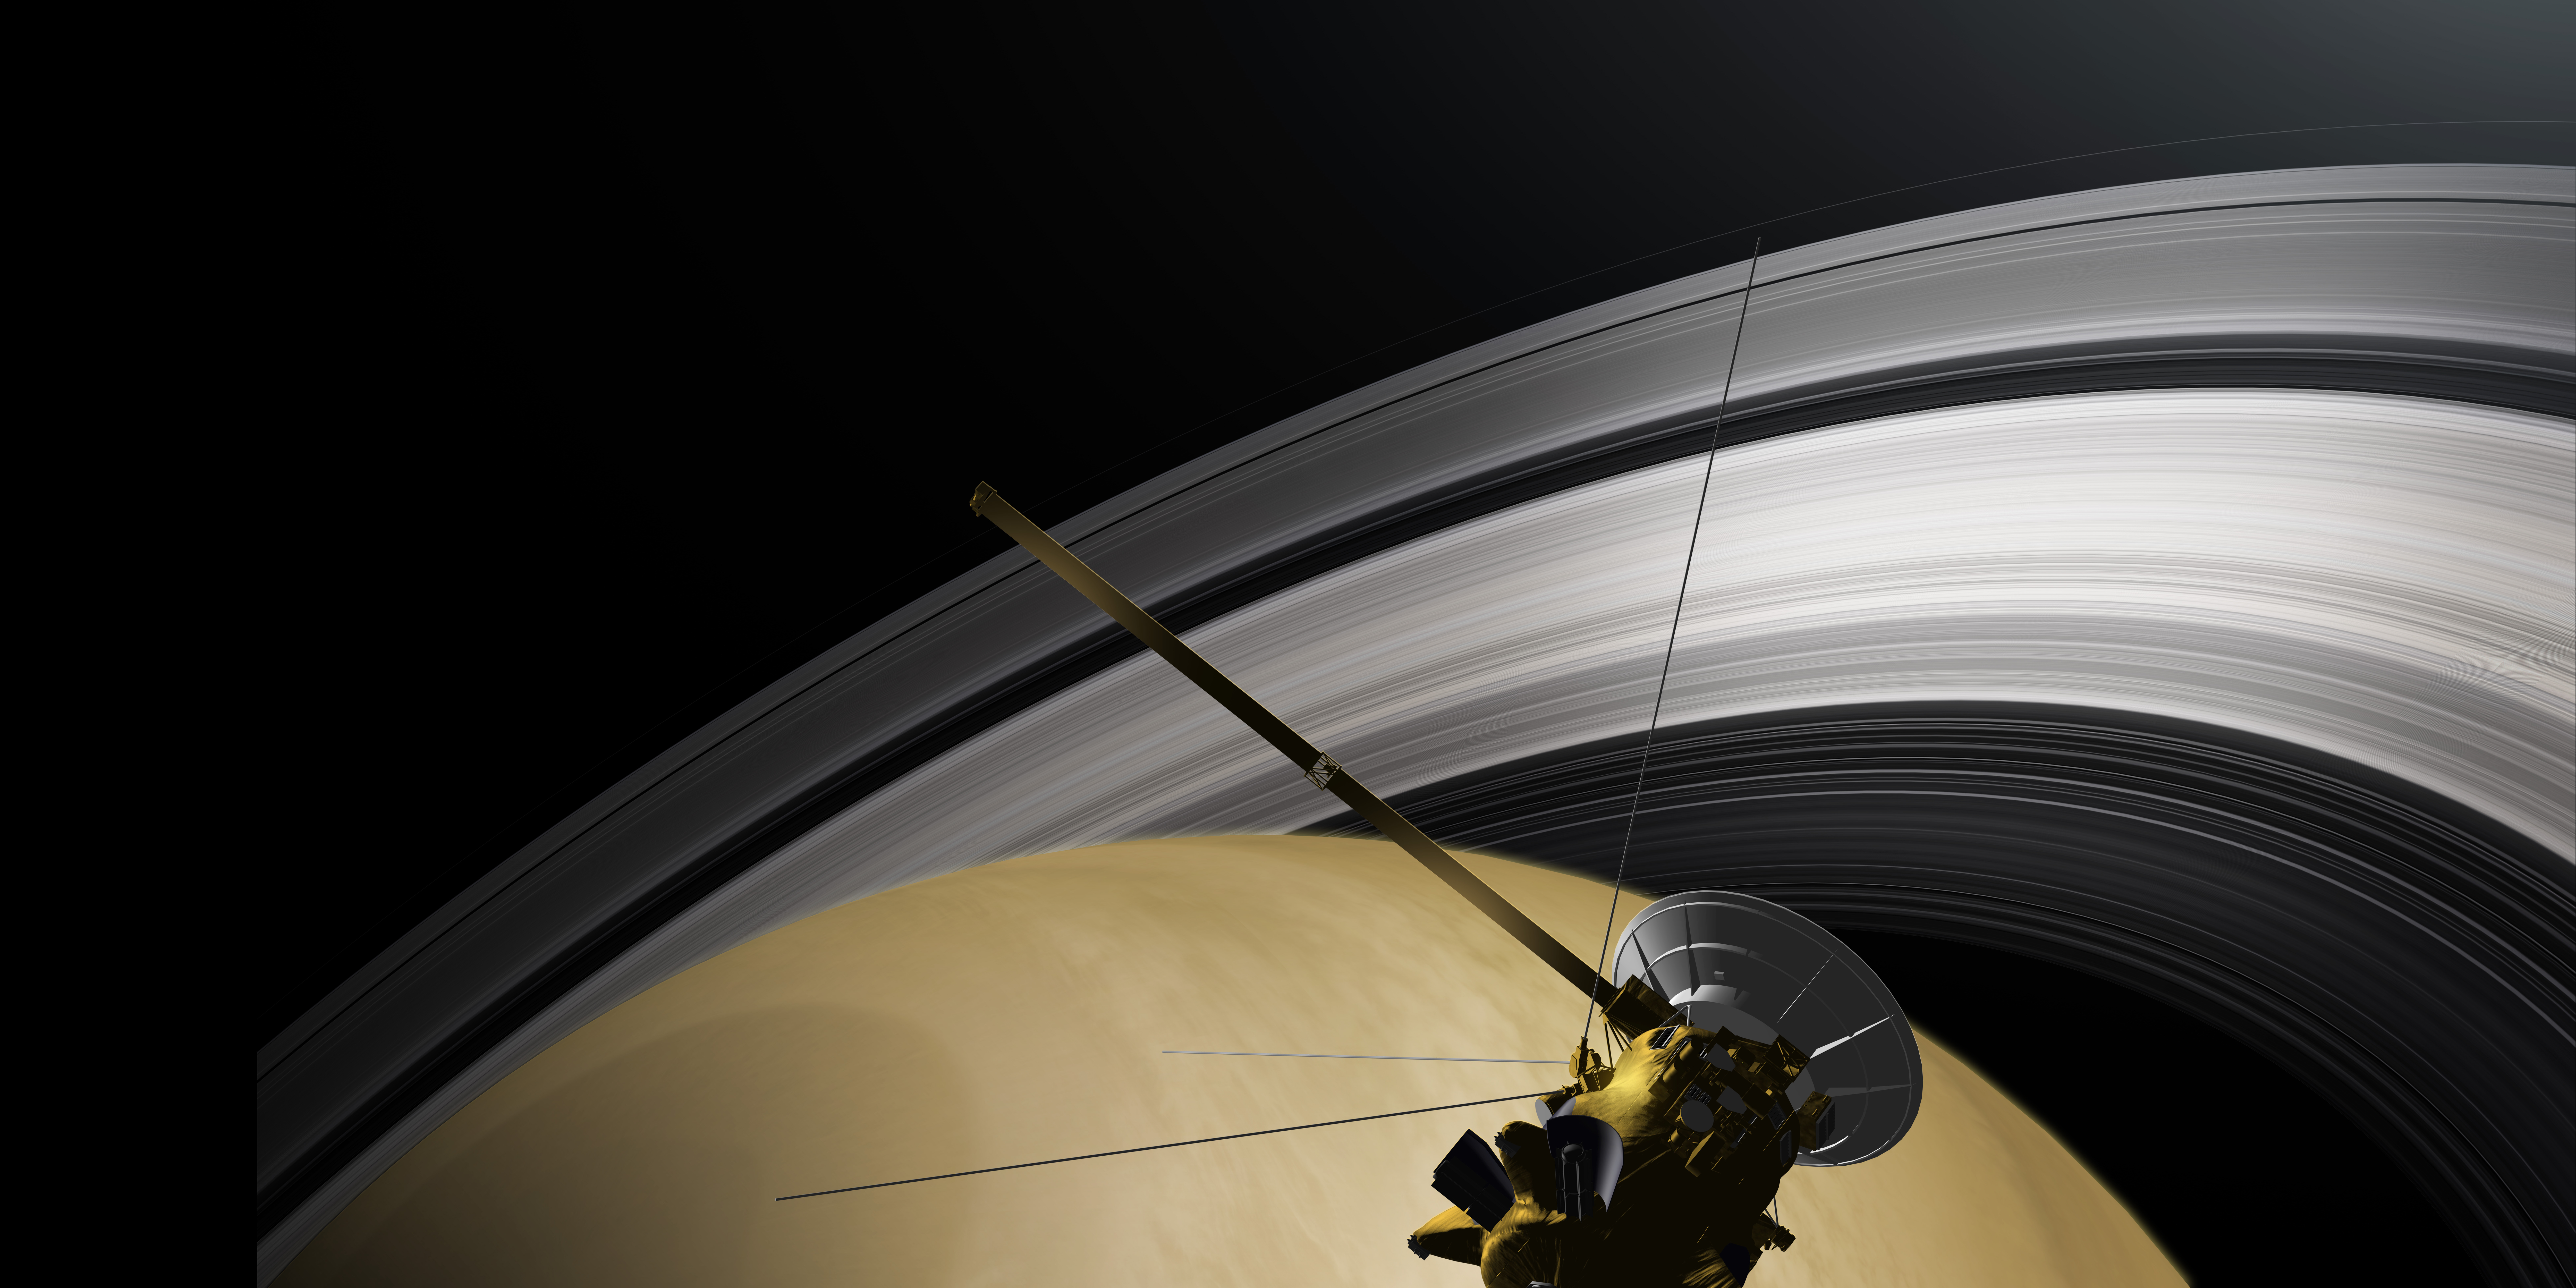 Illustration of spacecraft at Saturn.